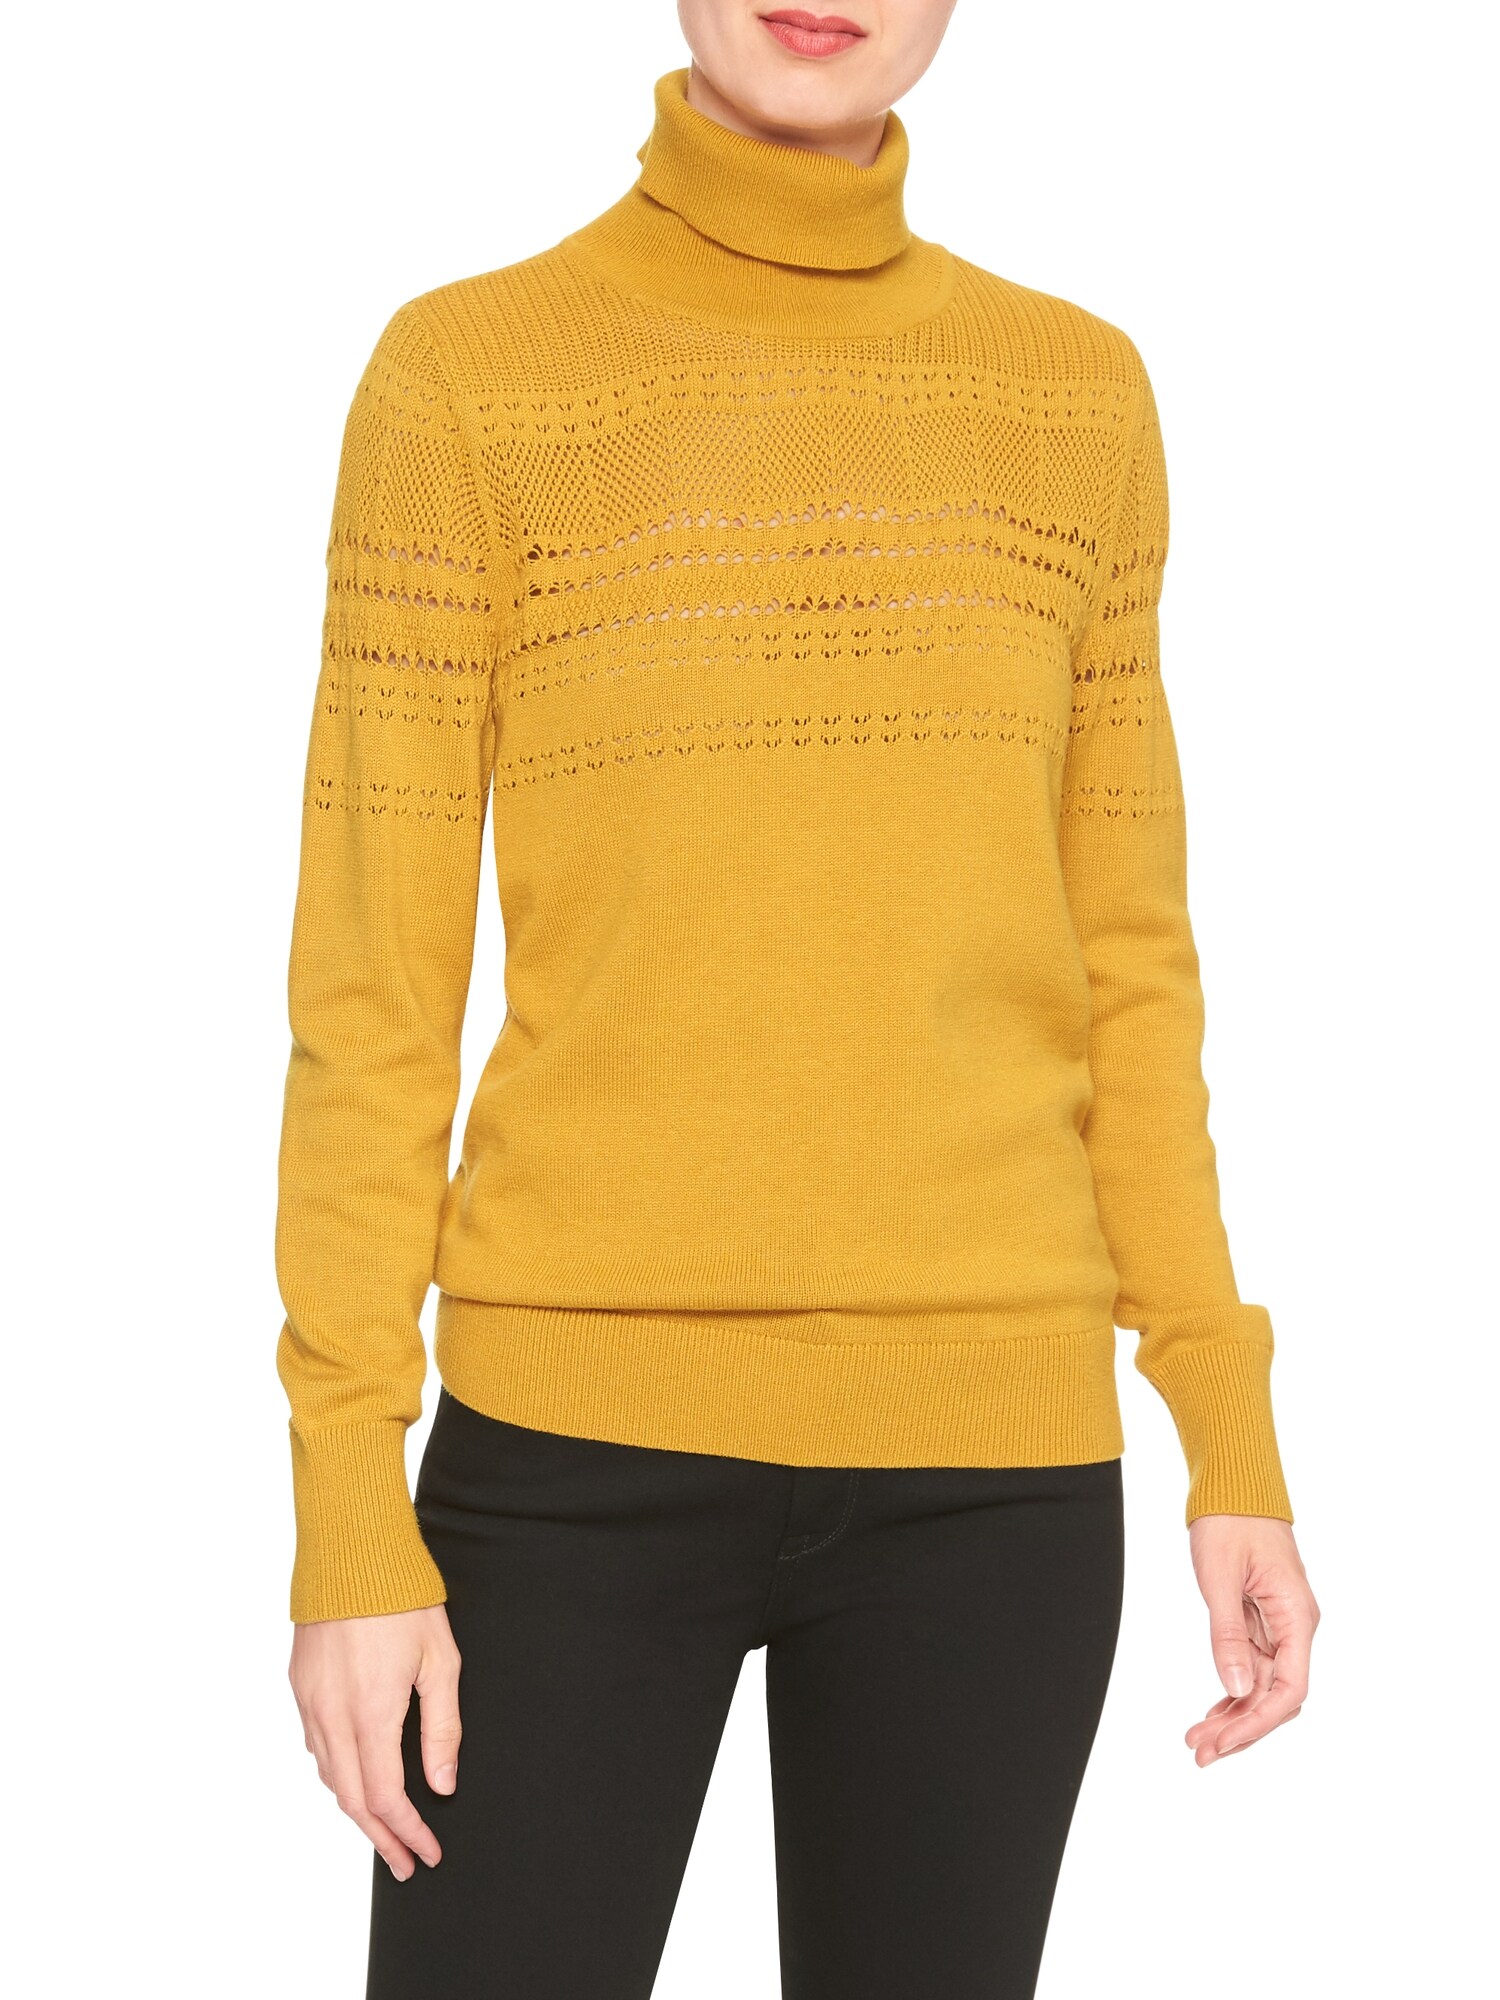 Pointelle Micro-Knit Turtleneck Sweater